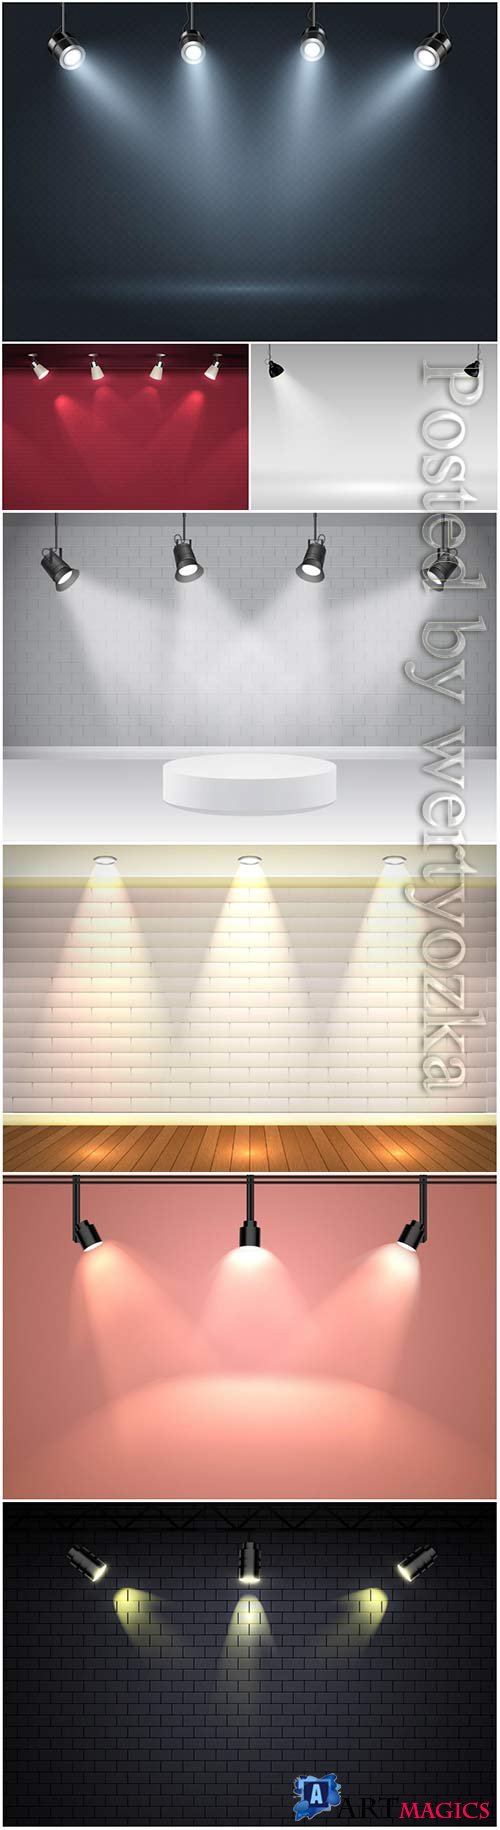 Spot lights background vector illustration